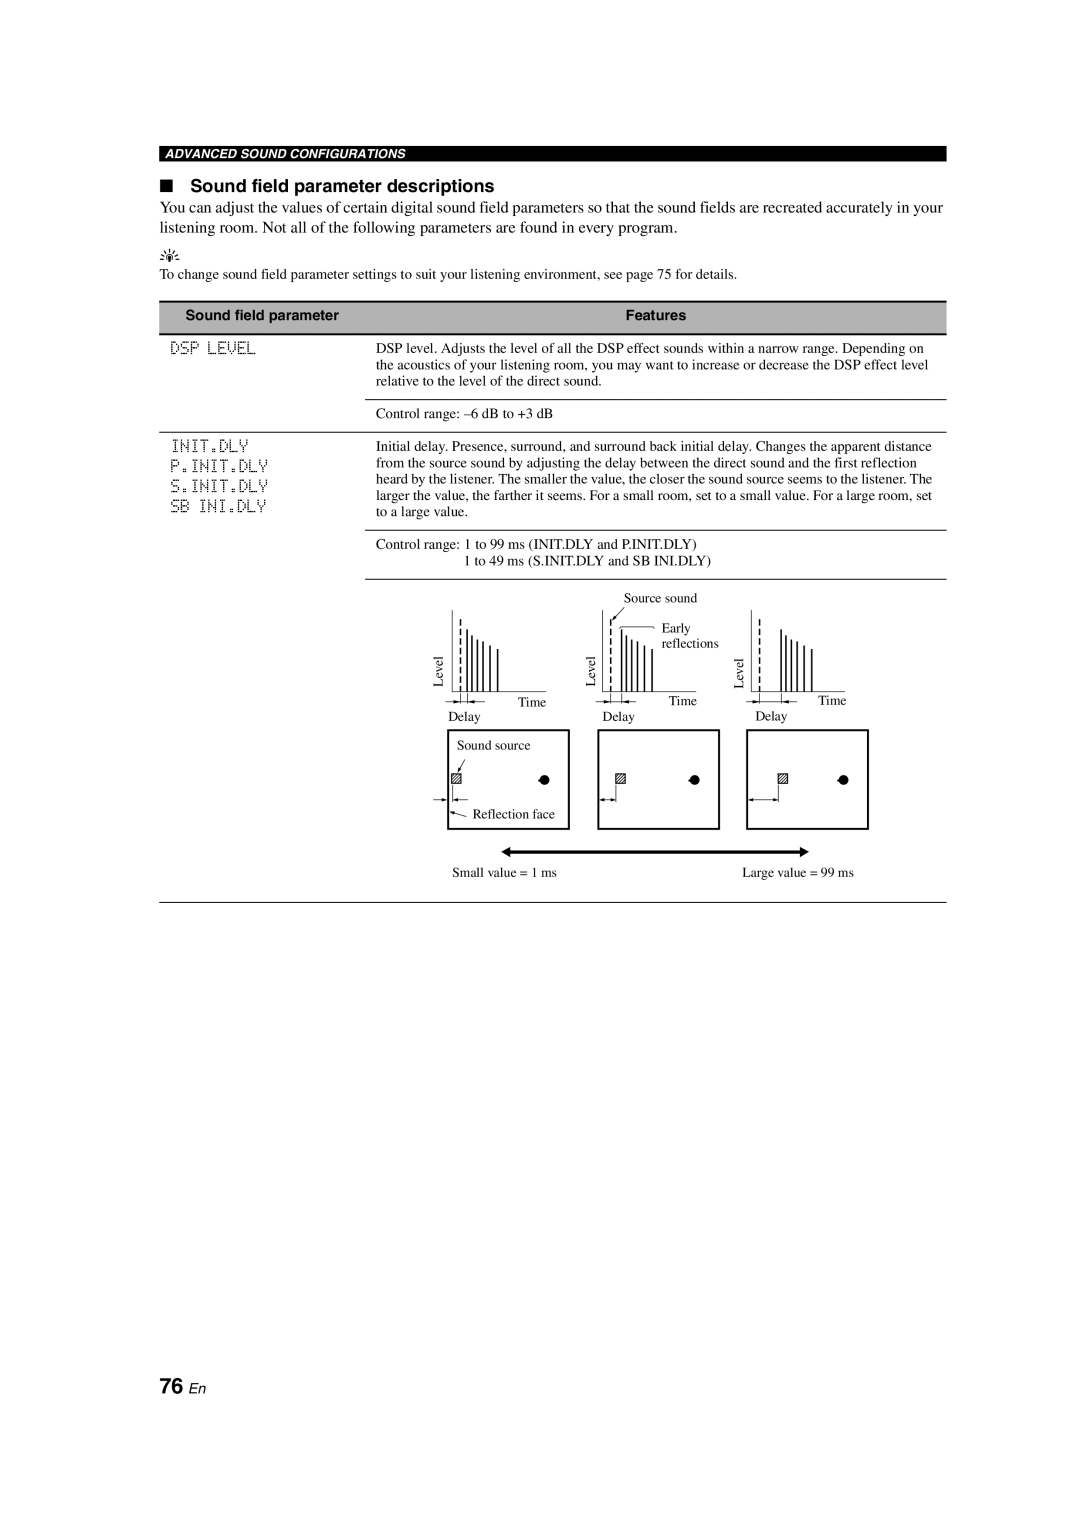 Yamaha HTR-6090 owner manual 76 En, Sound field parameter descriptions 